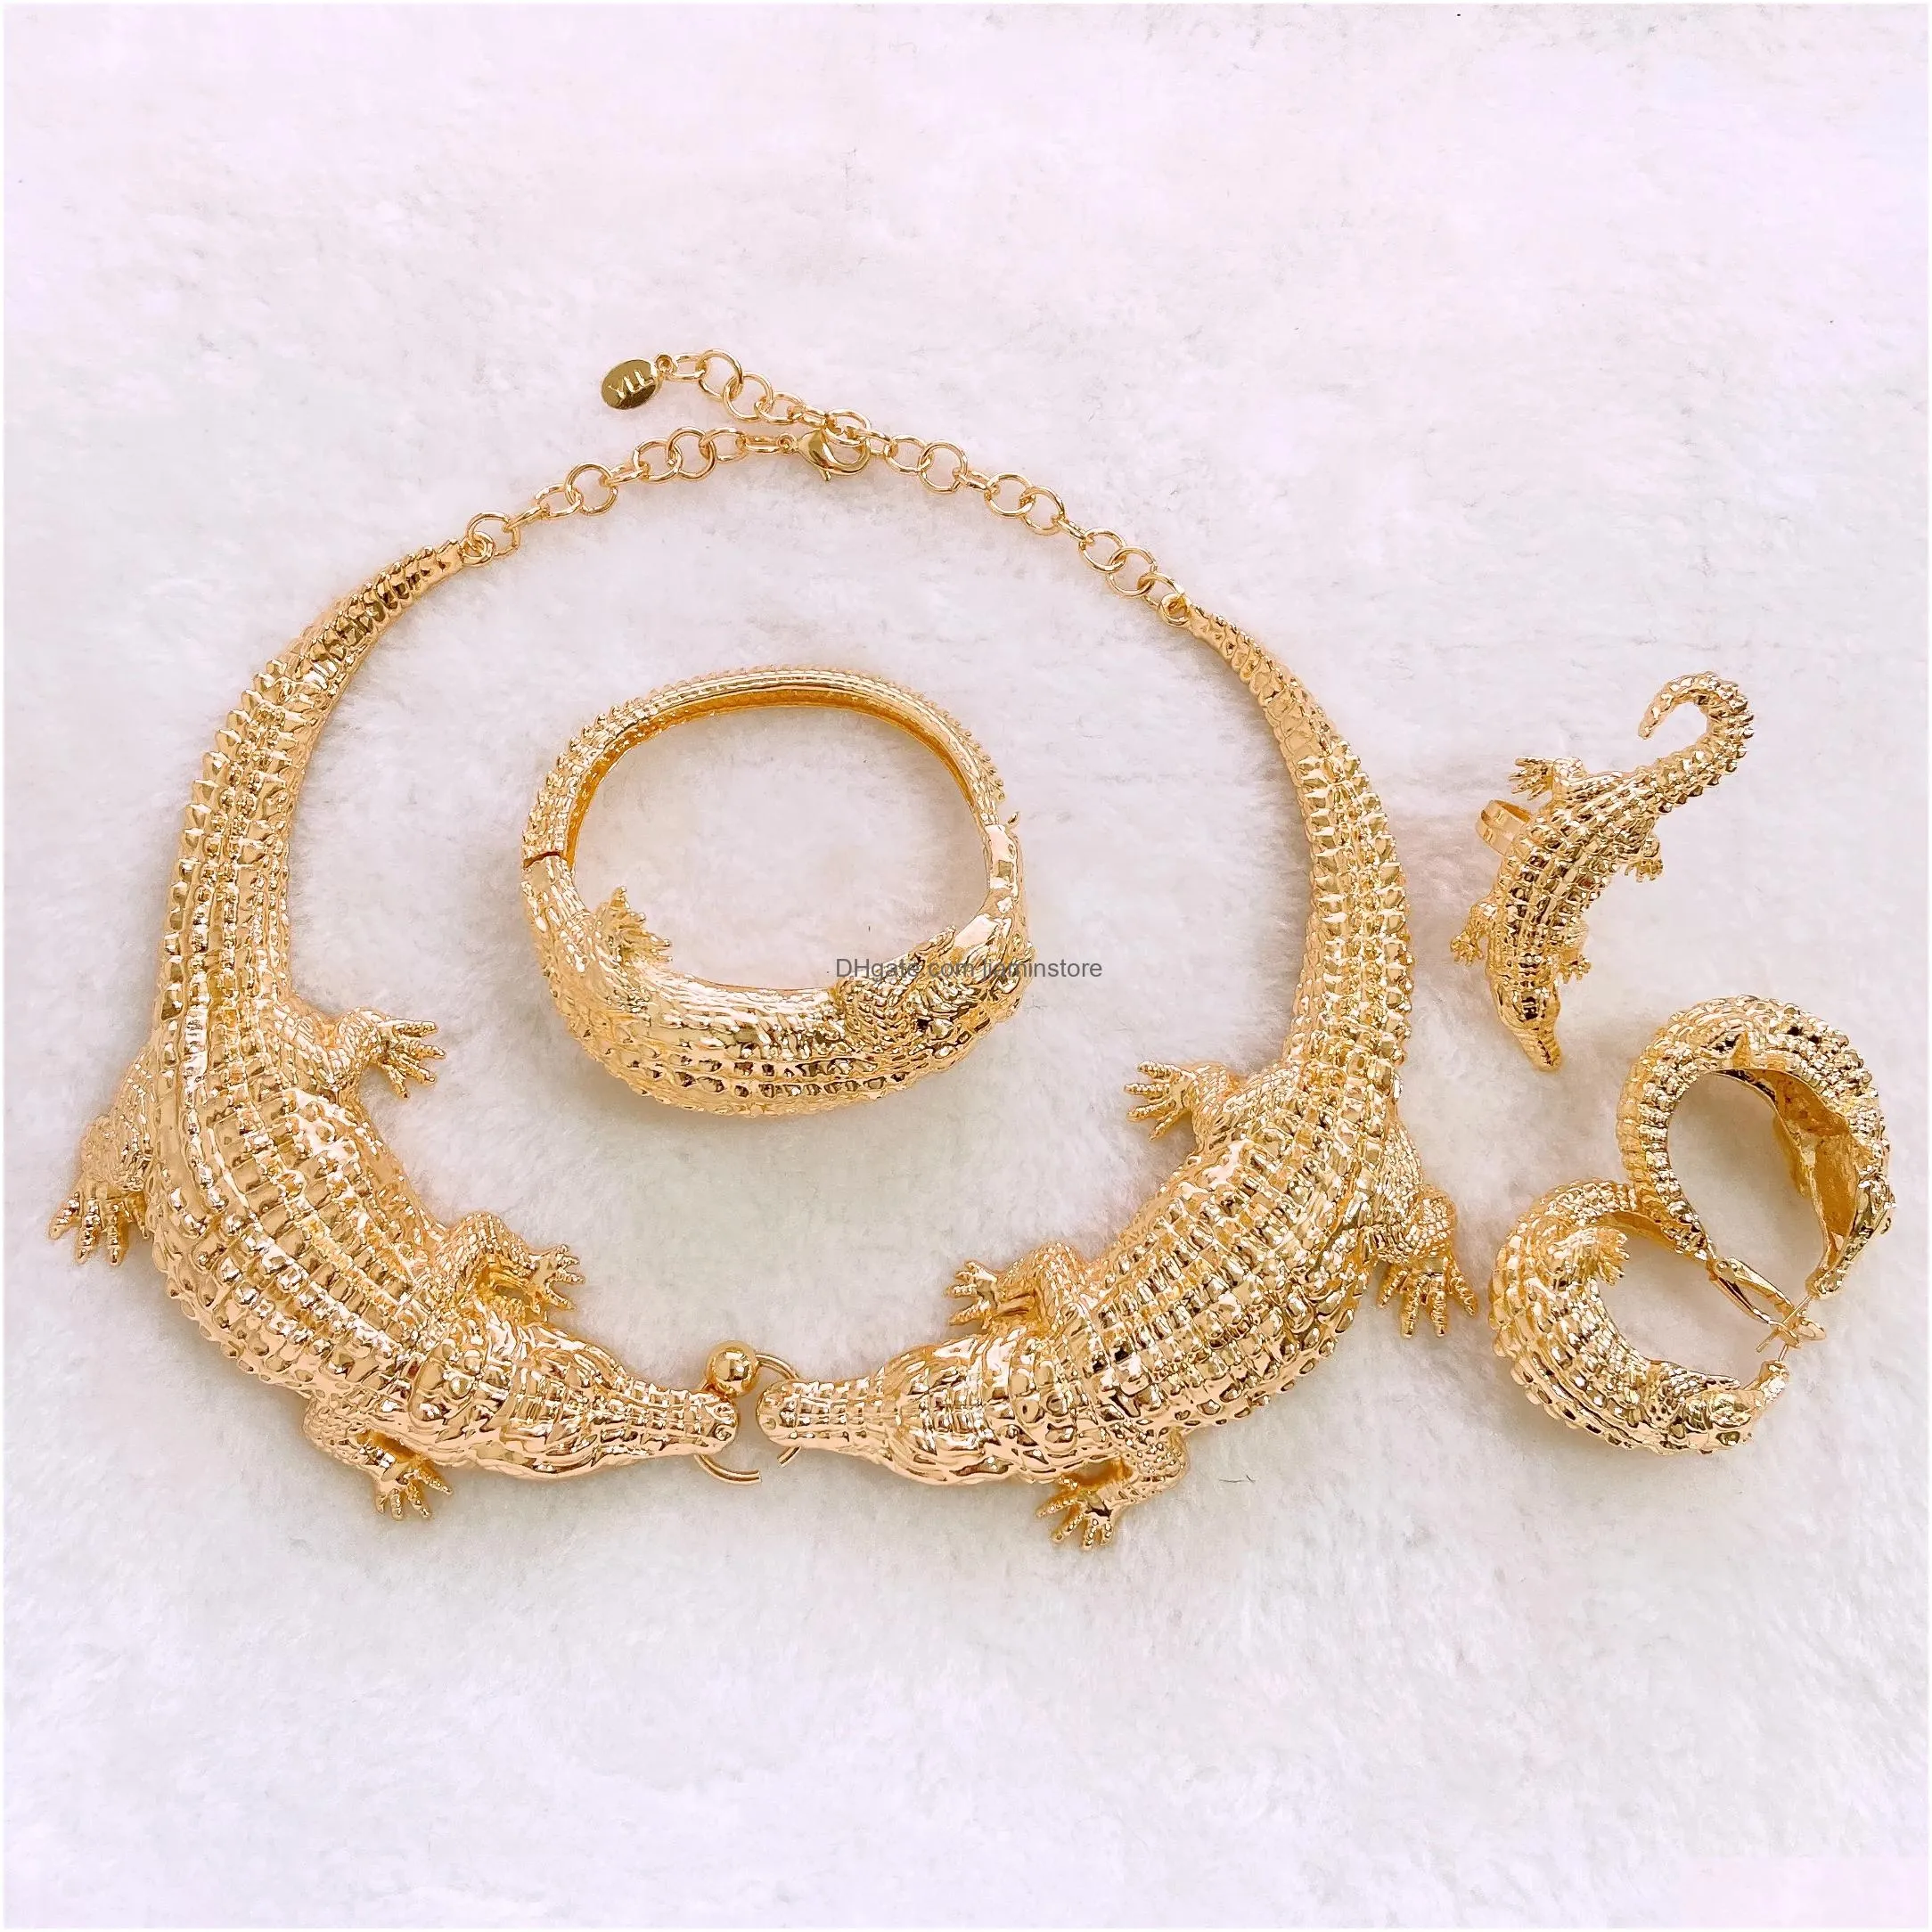 Yulaili Italian gold plated triangle shape necklace jewelry sets for women 24k dubai wedding set